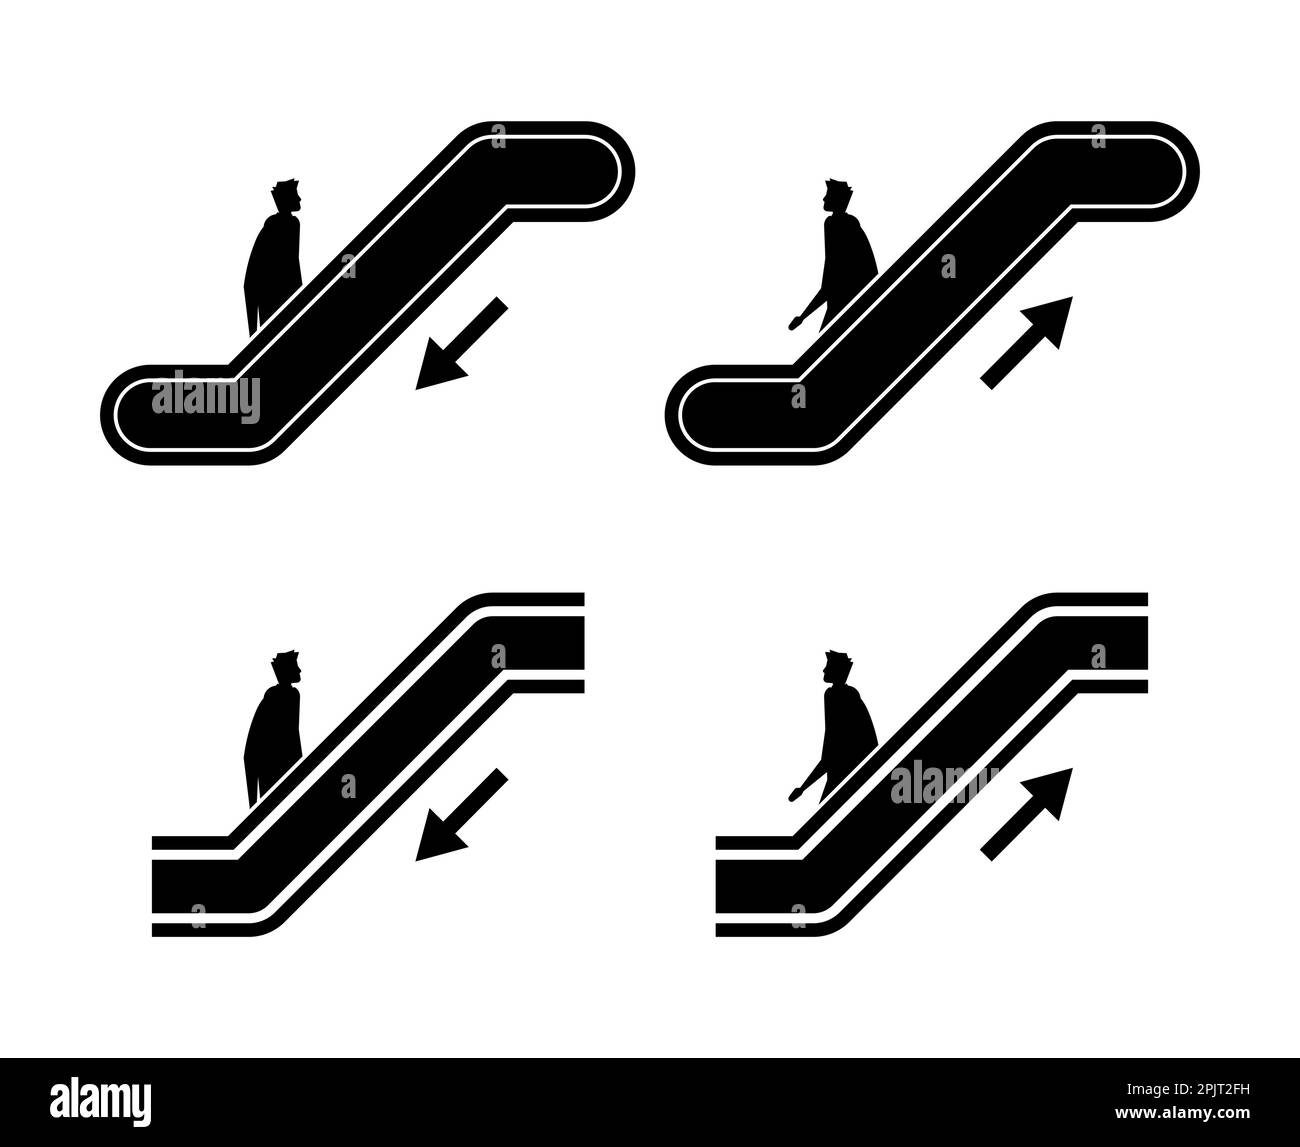 Escalator elevator icon. Up and down escalator Stock Vector